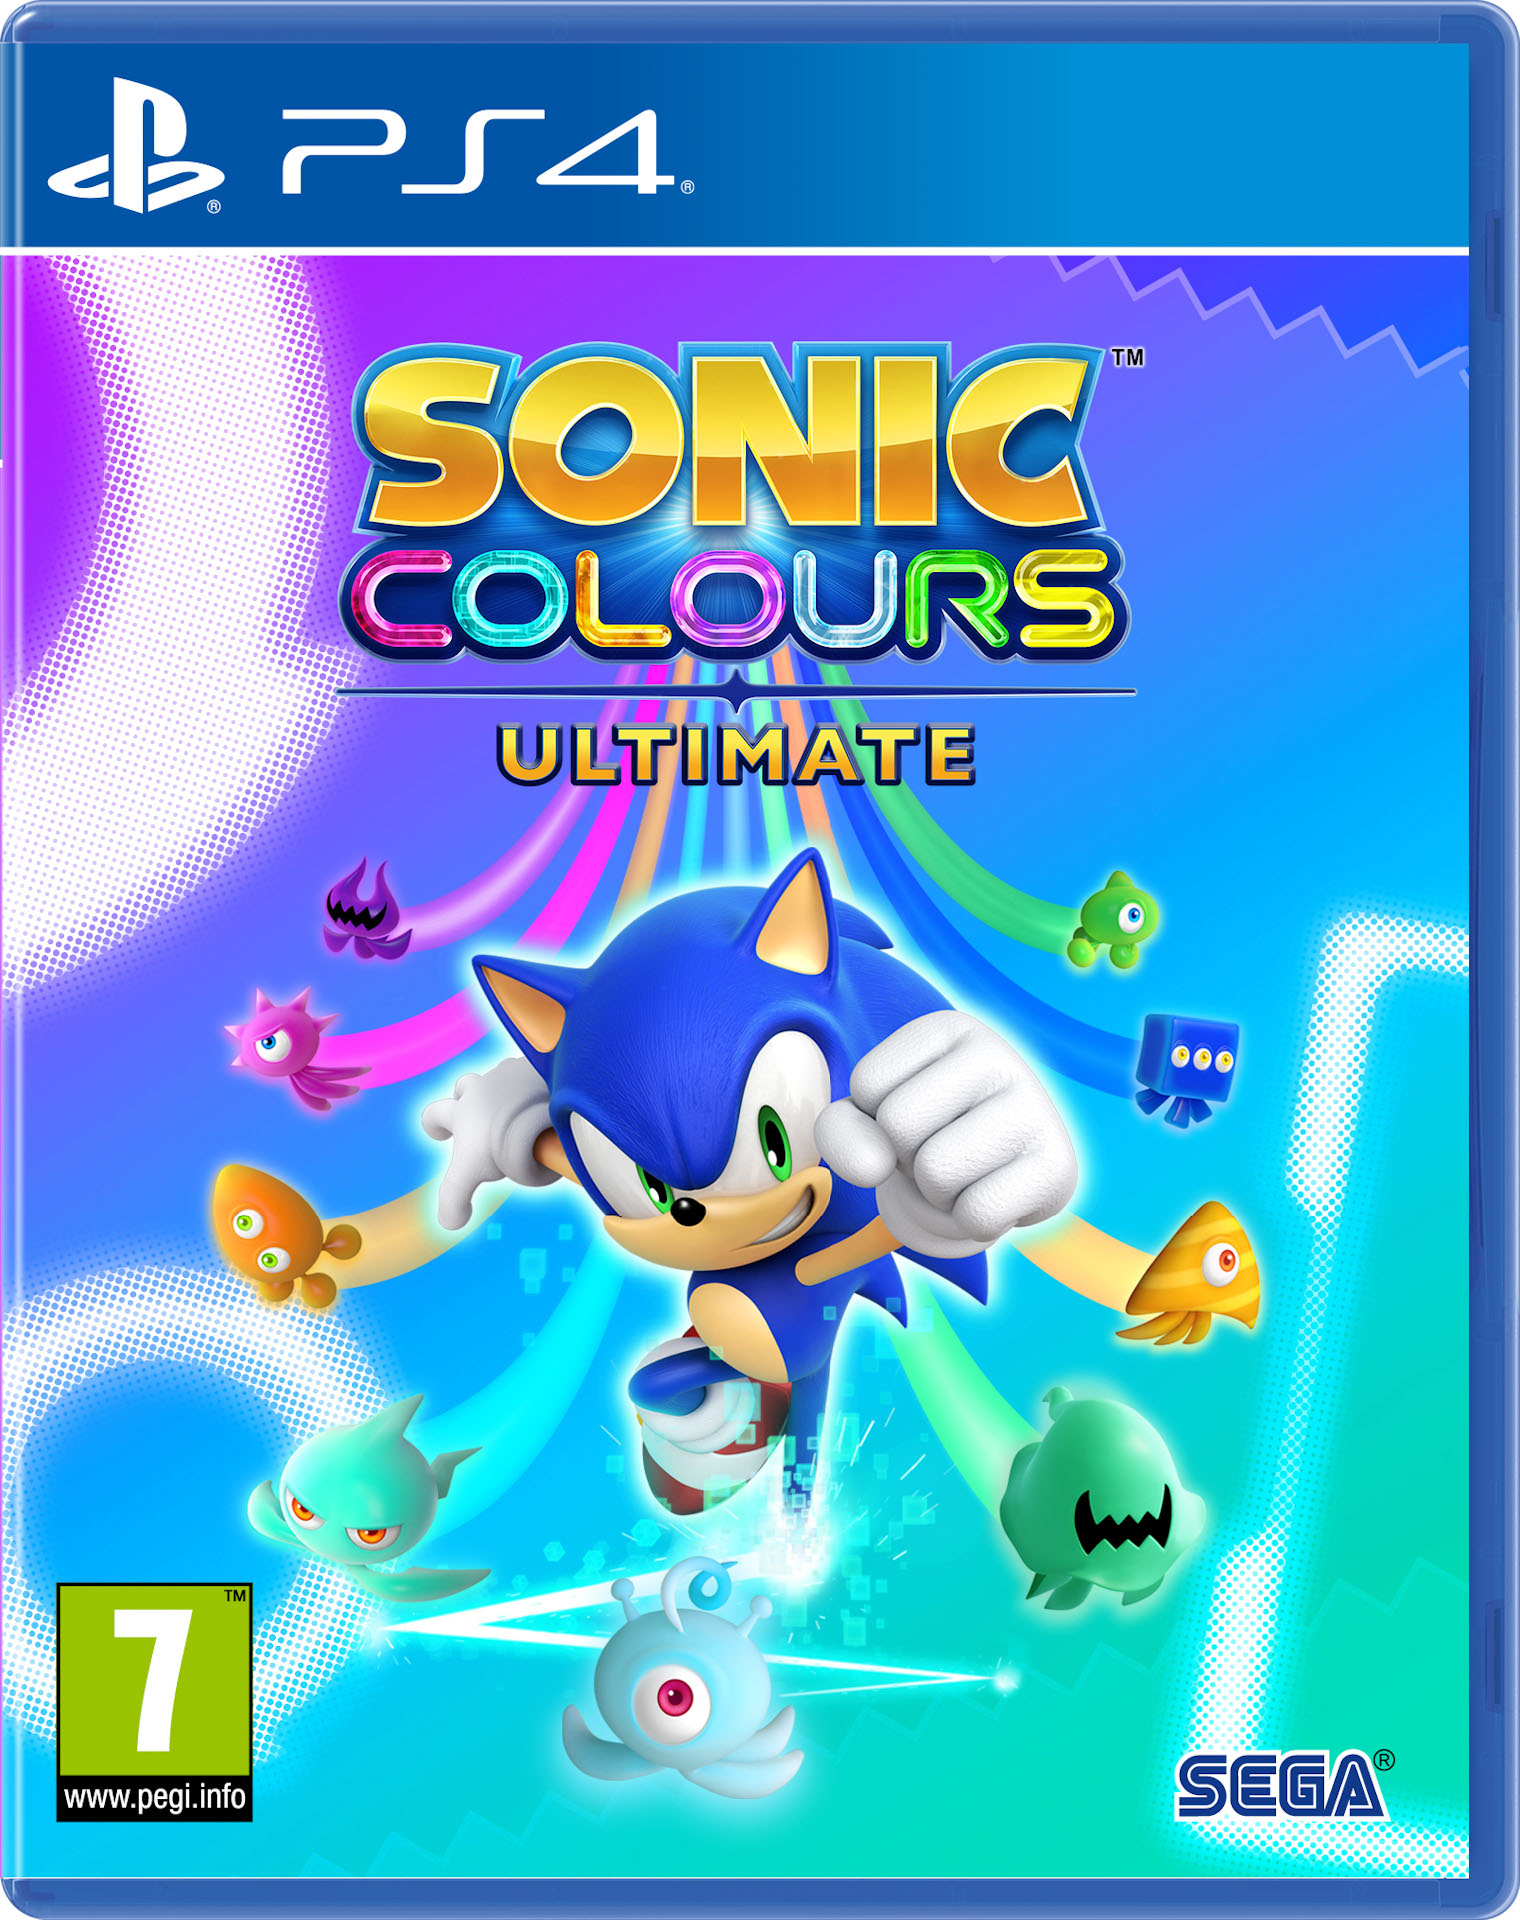 Sonic Colours Ultimate PS4 - SEGA 1.12.01.01.039